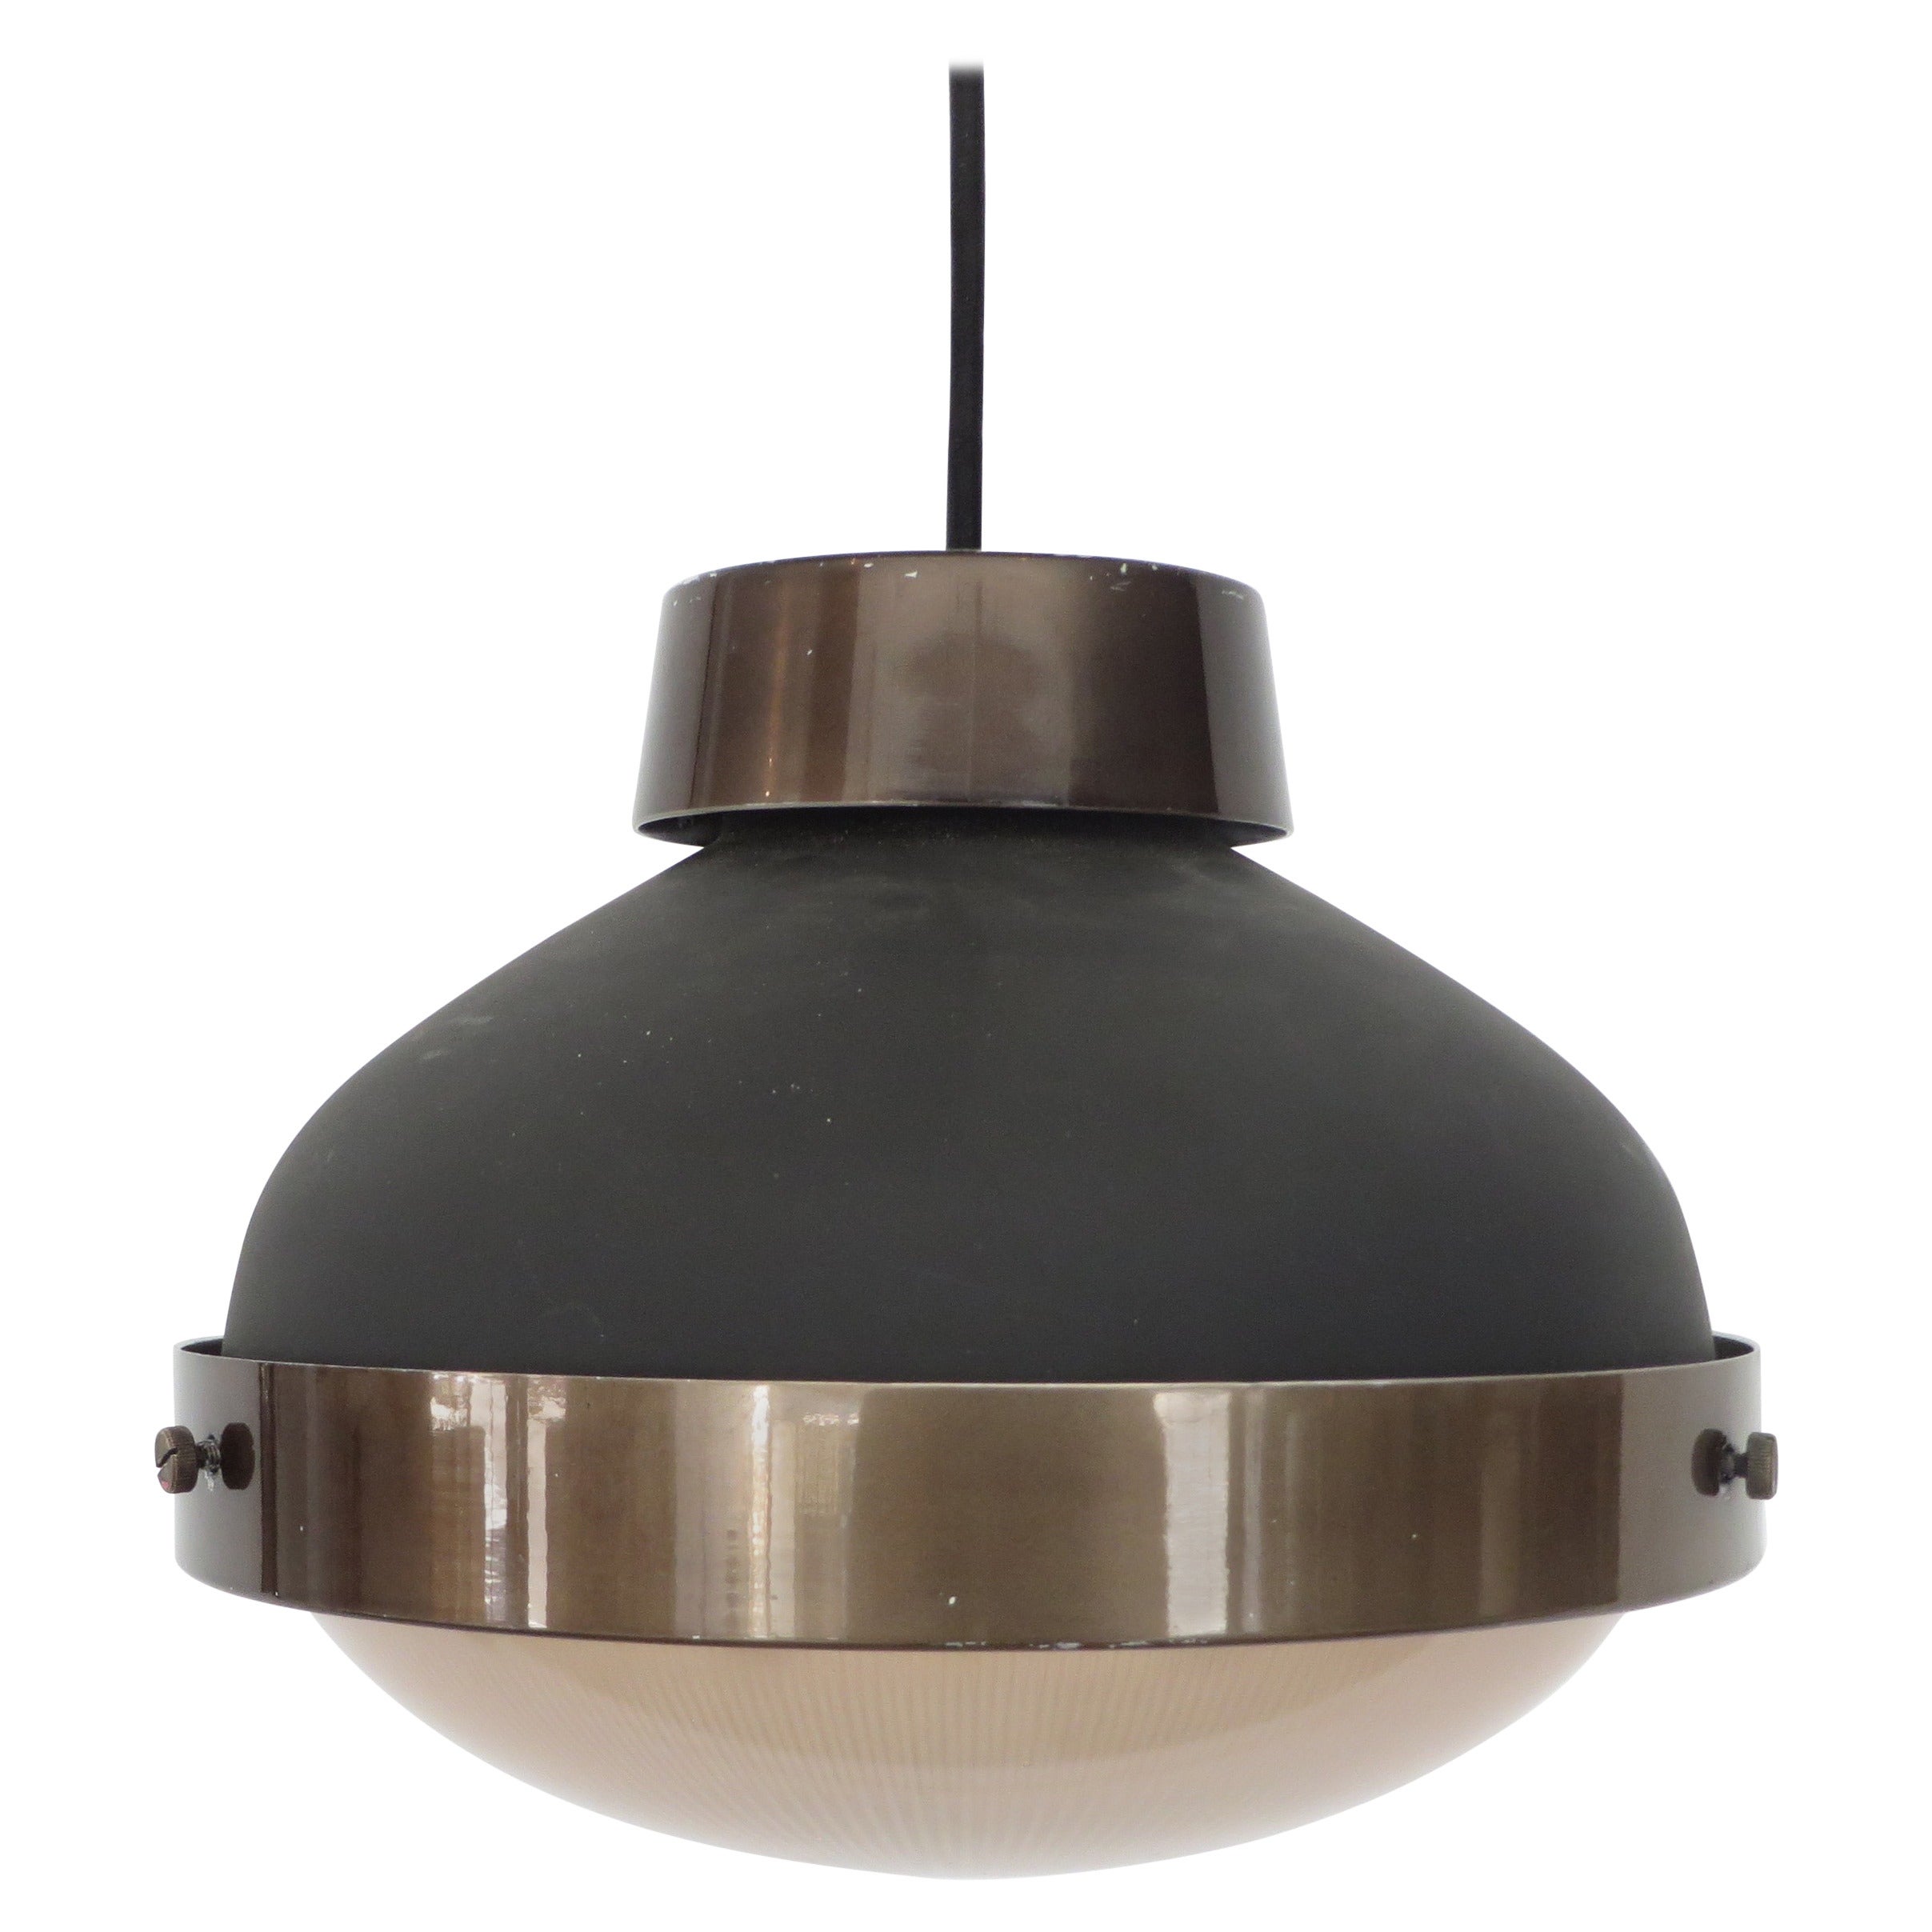 Italian Ceiling Lamp by Gino Sarfatti Model 3027p, for Arteluce